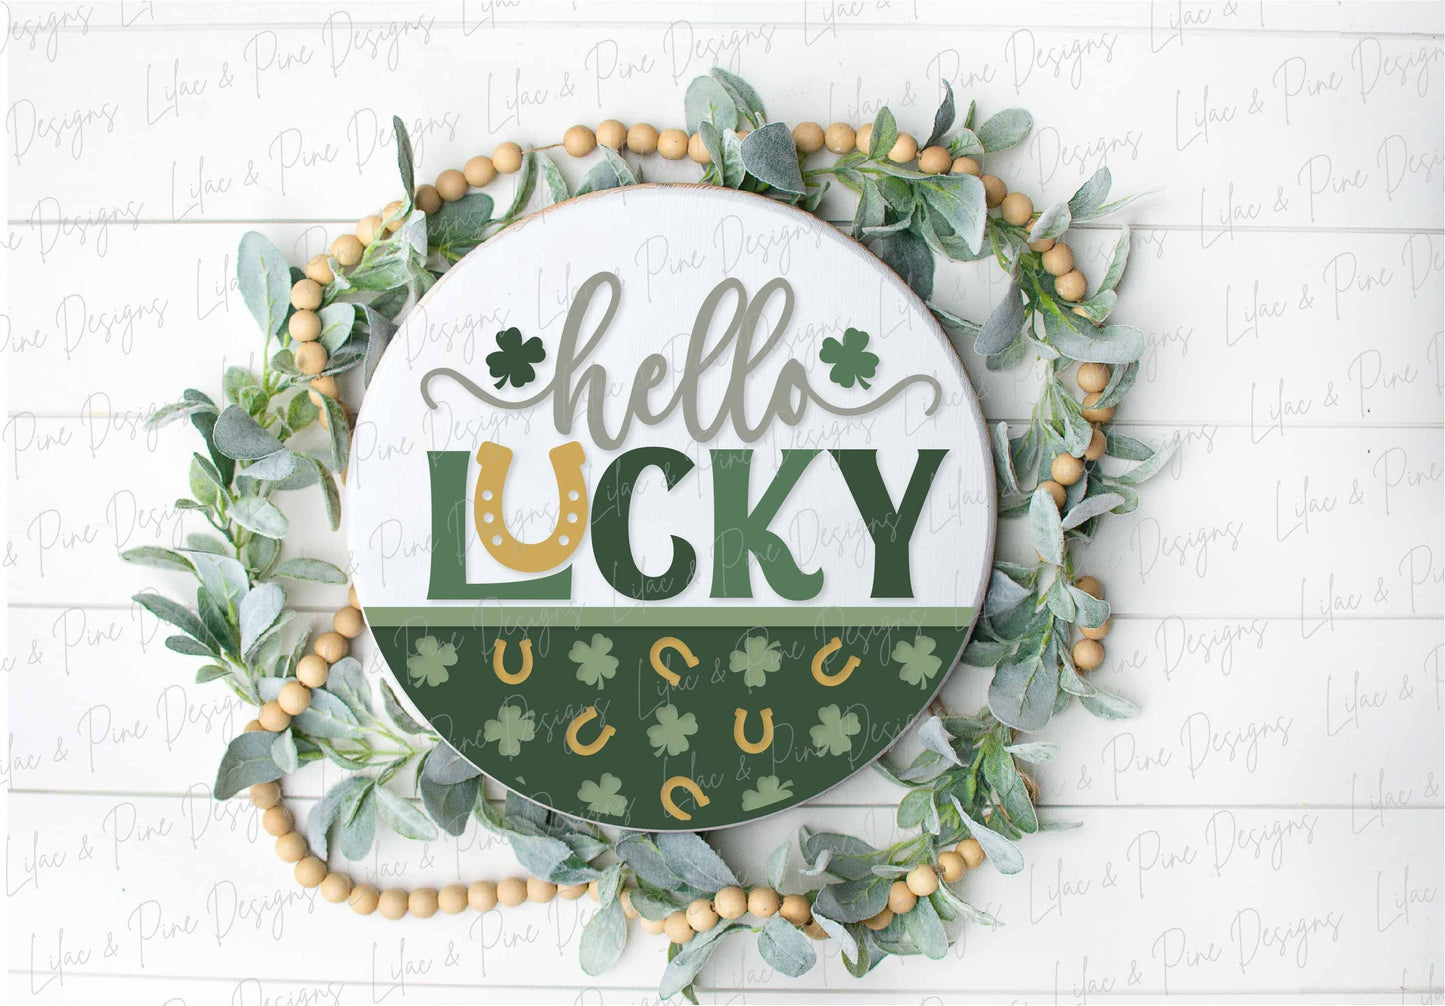 Lucky sign SVG, St Patricks Day door hanger, Shamrock Welcome sign SVG, lucky clover door round svg, Glowforge SVG, laser cut file